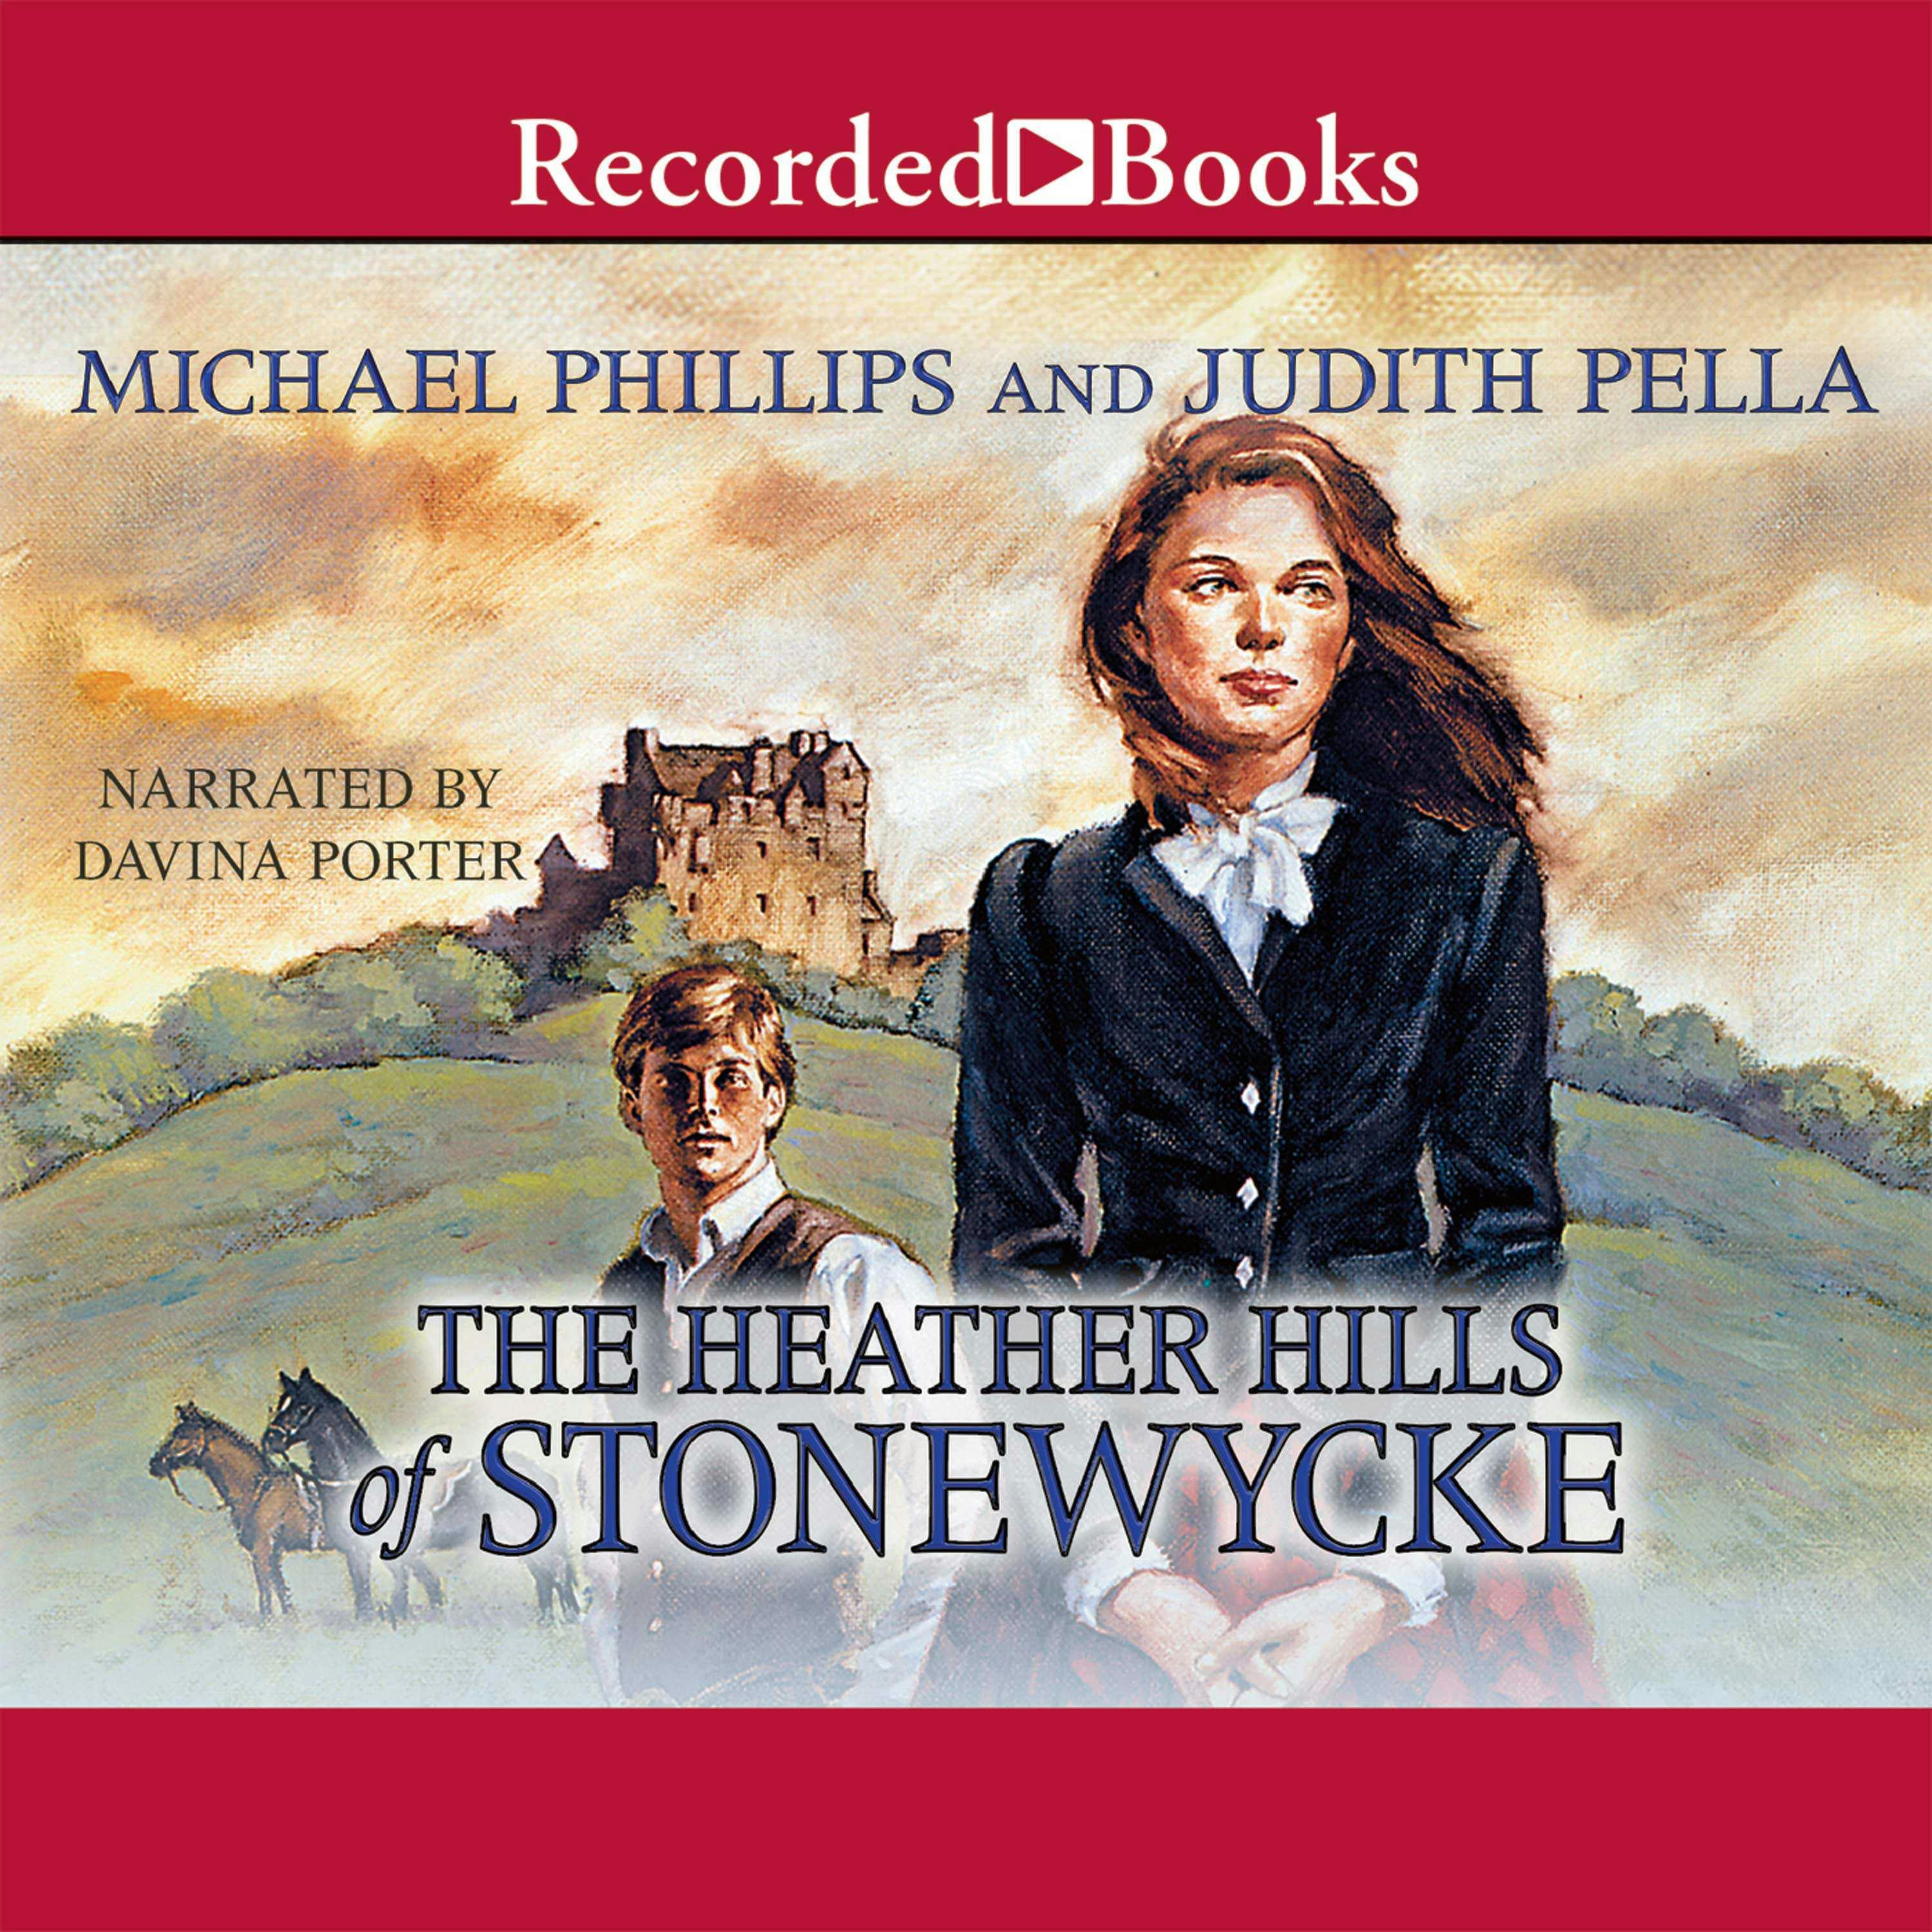 The Heather Hills of Stonewycke - Judith Pella, Michael Phillips